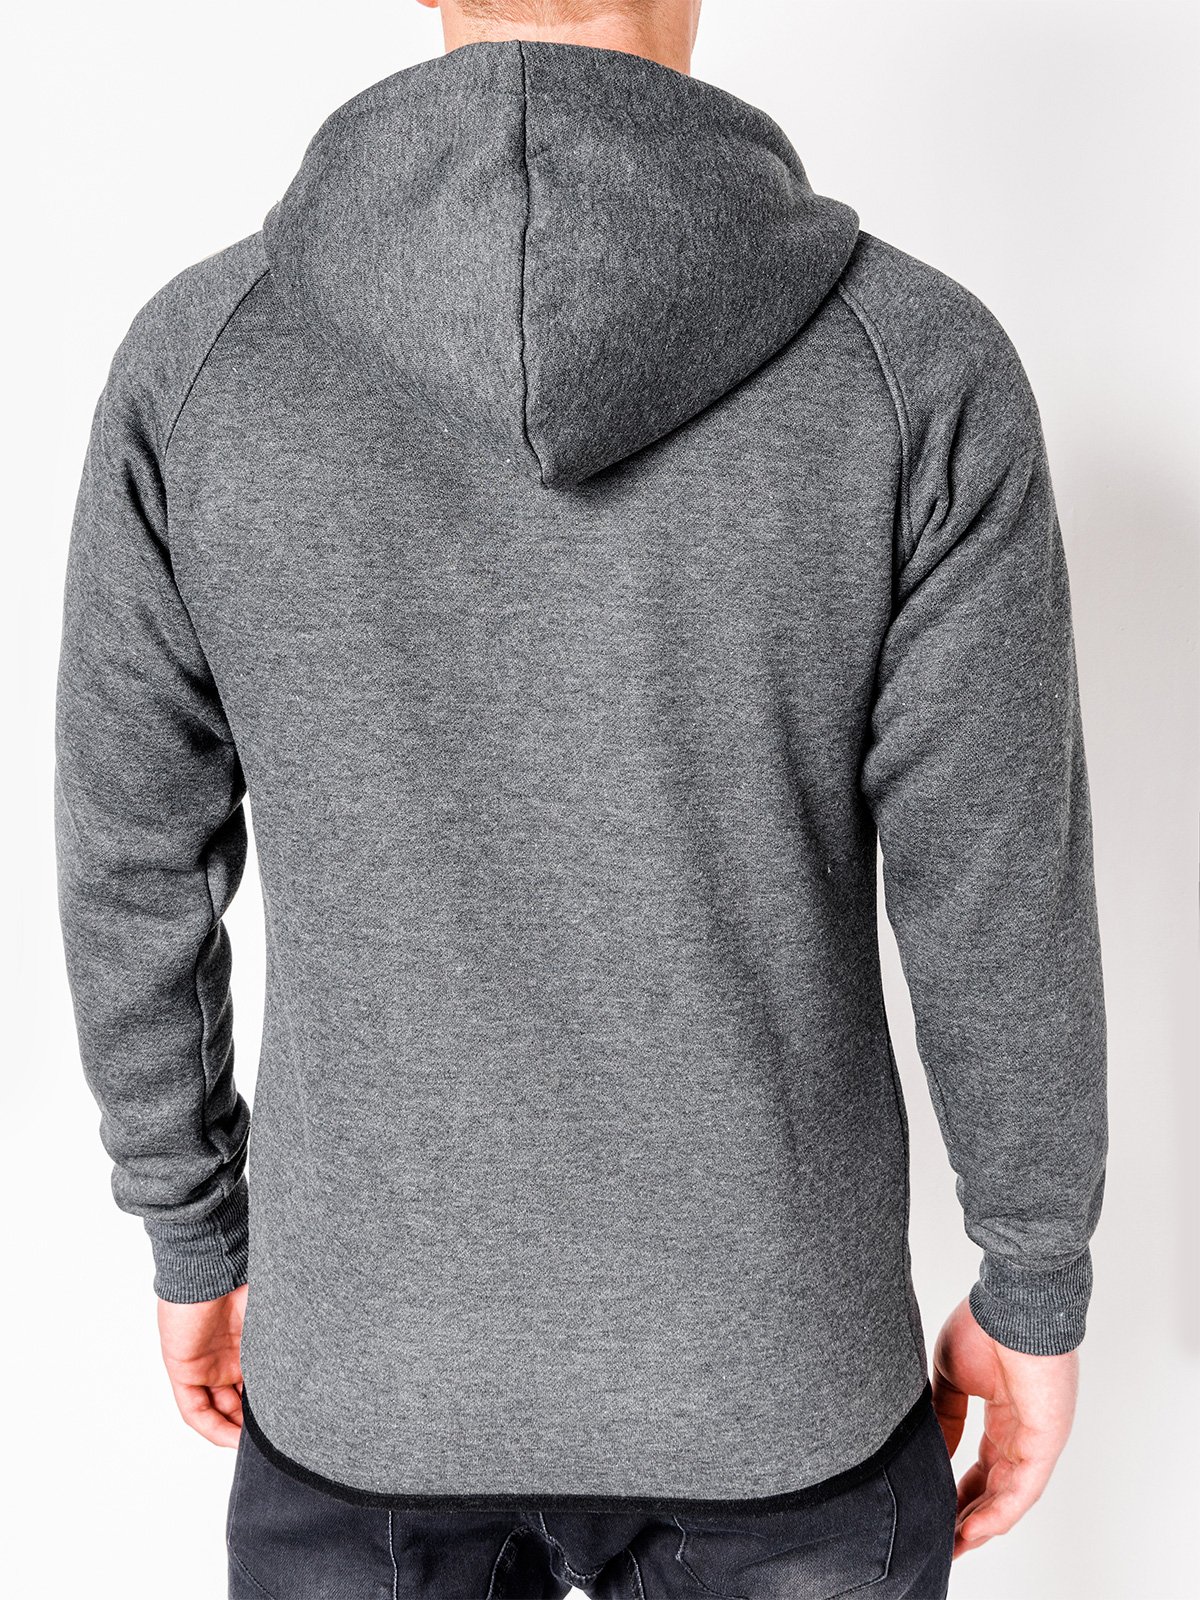 Men's zip-up hoodie B746 - dark grey | MODONE wholesale - Clothing For Men